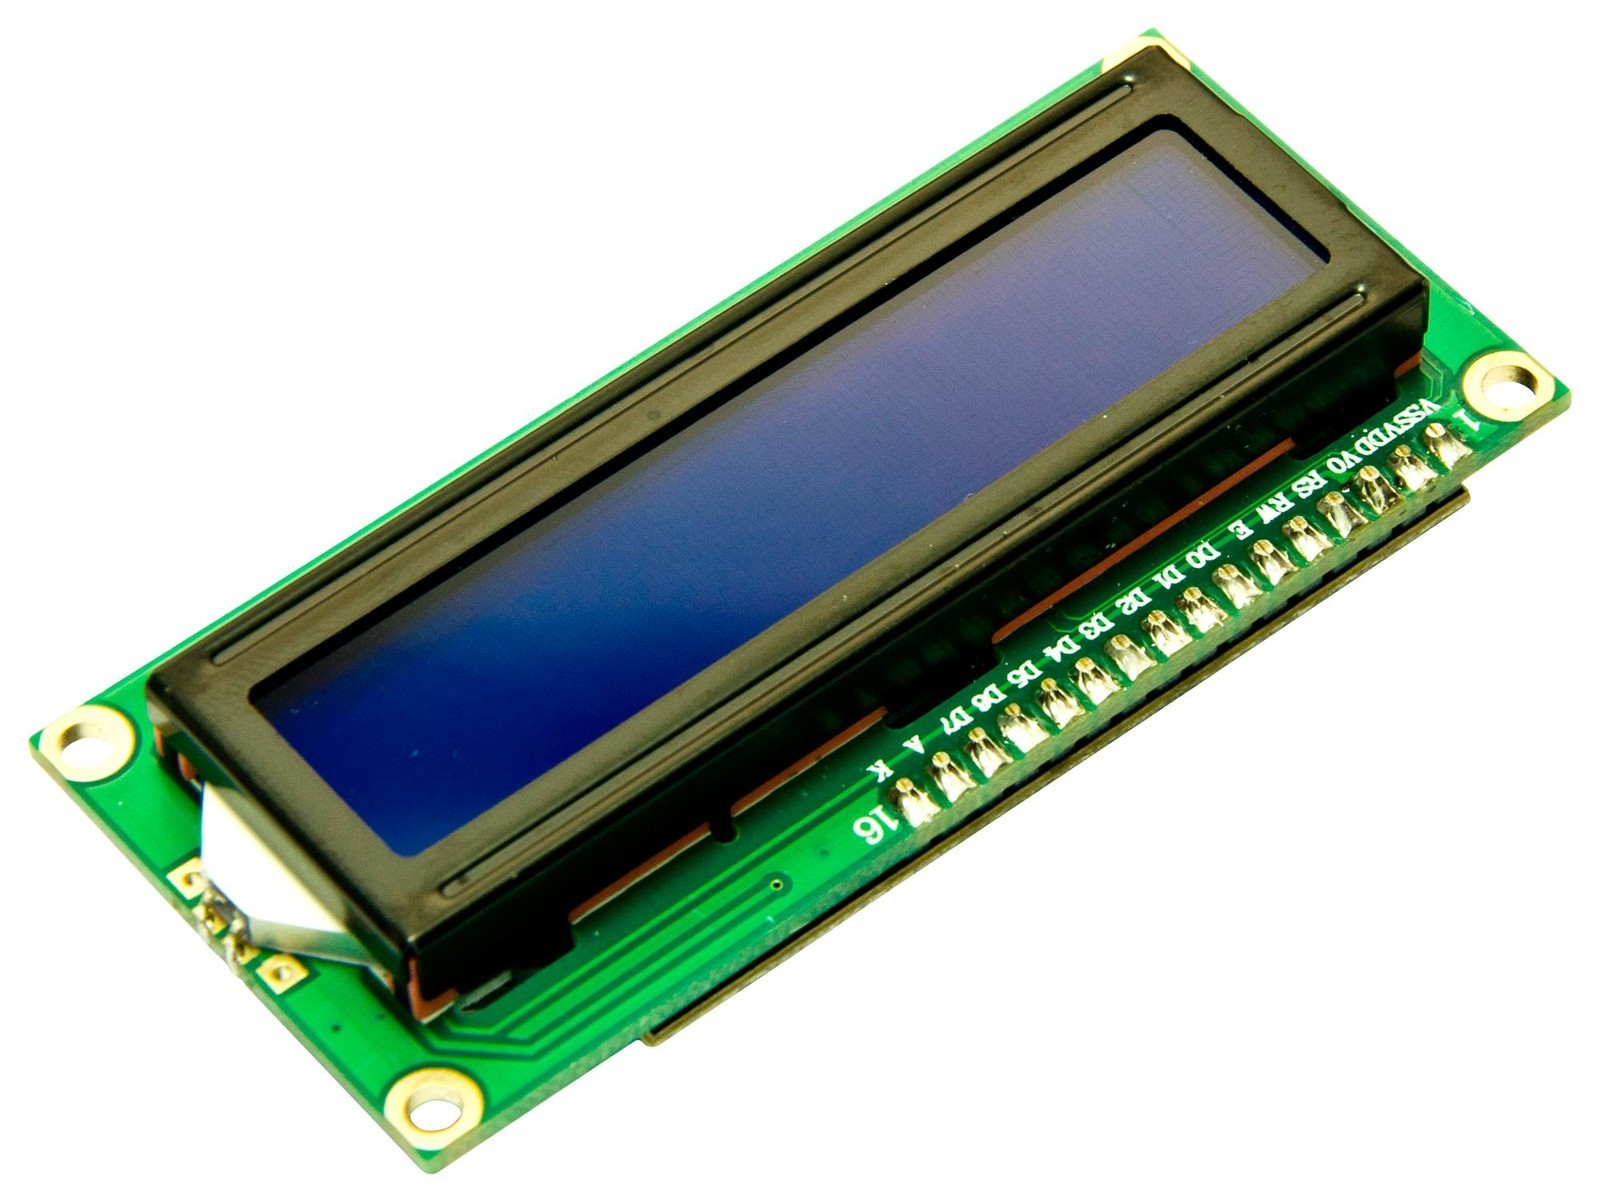 DFRobot Dfr0063 Lcd Display Module, I2C 16X2 Arduino